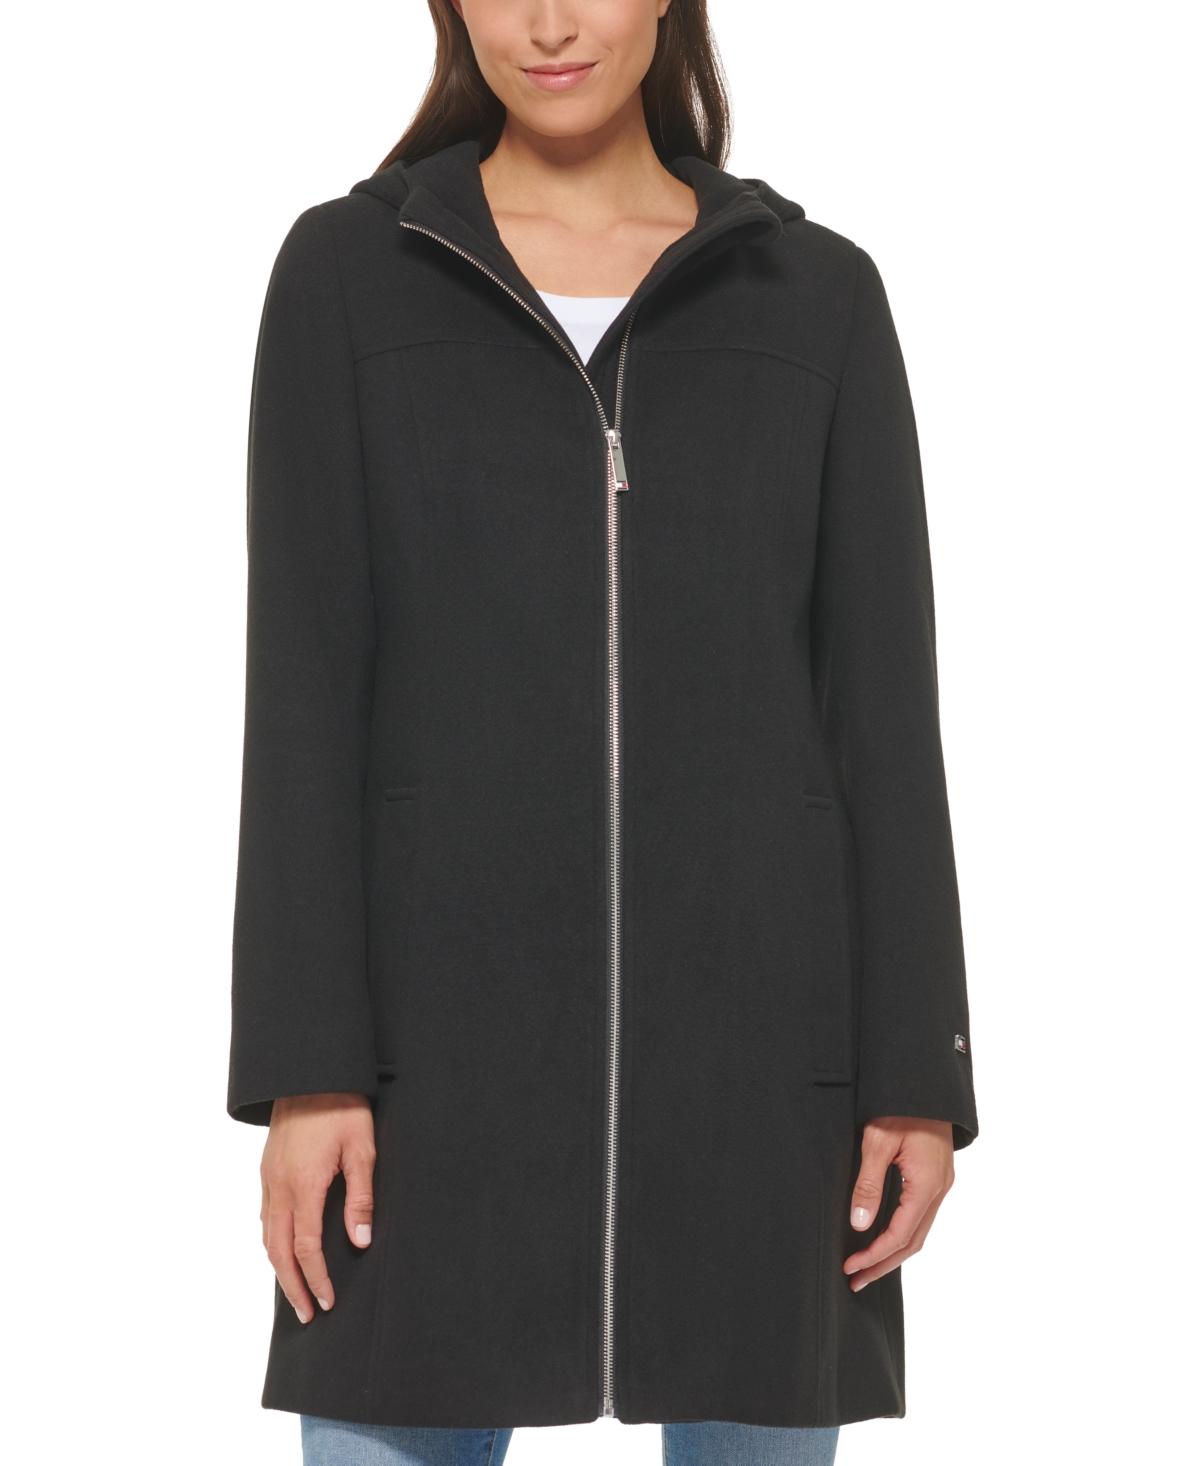 Tommy Hilfiger Women's Belted Hooded Coat